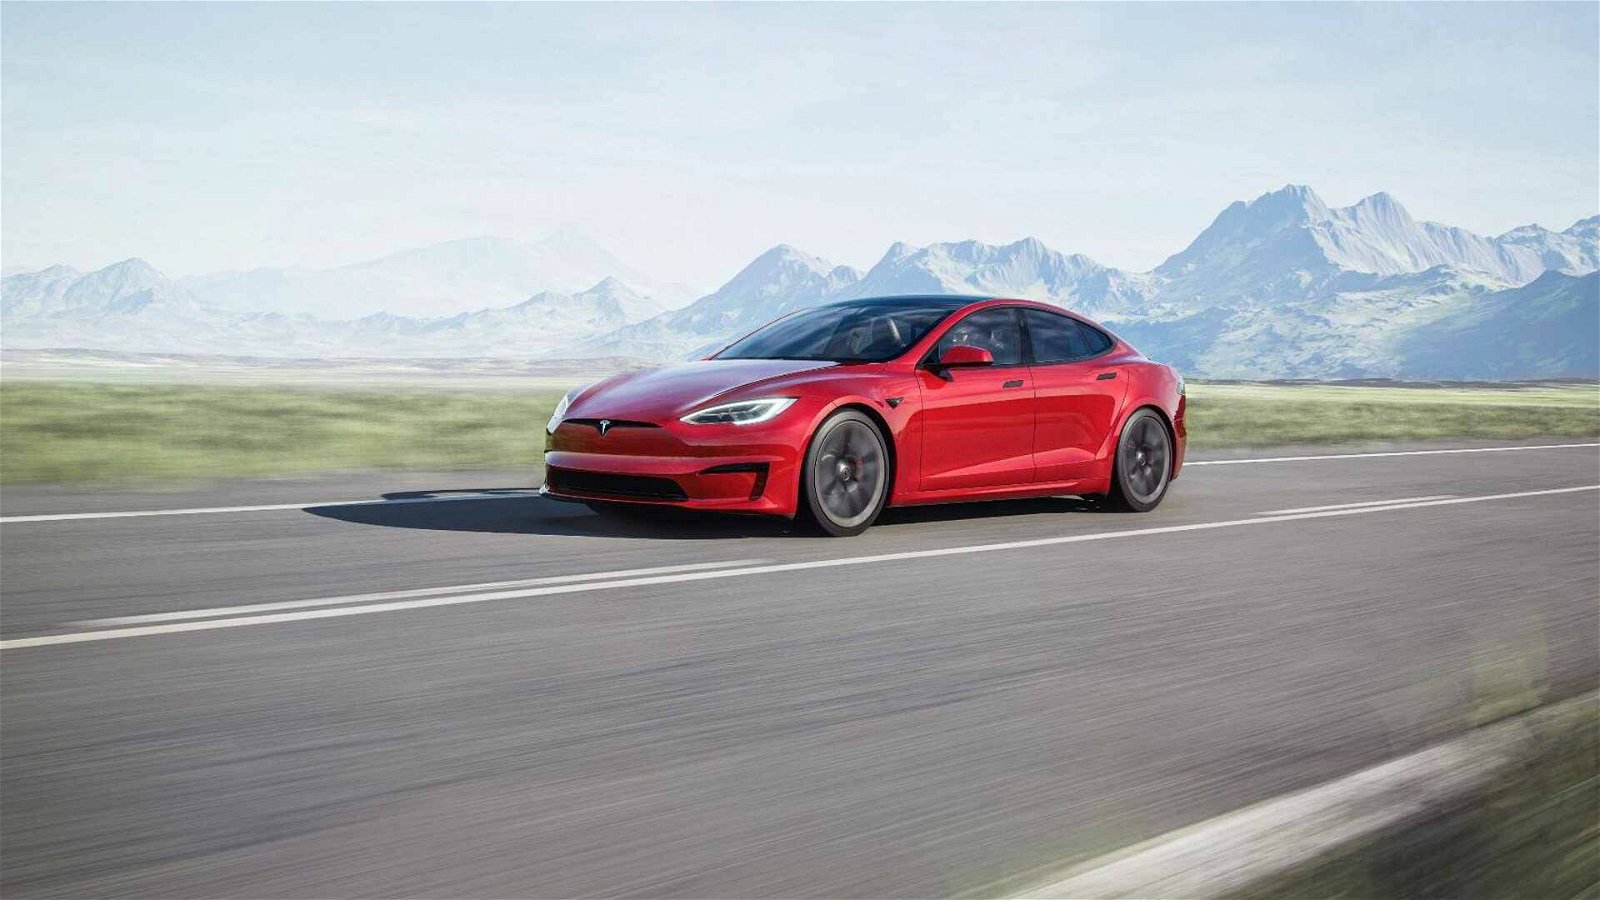 Immagine di Tesla Model S Plaid arriva in Italia, l'elettrica da 1020 cv